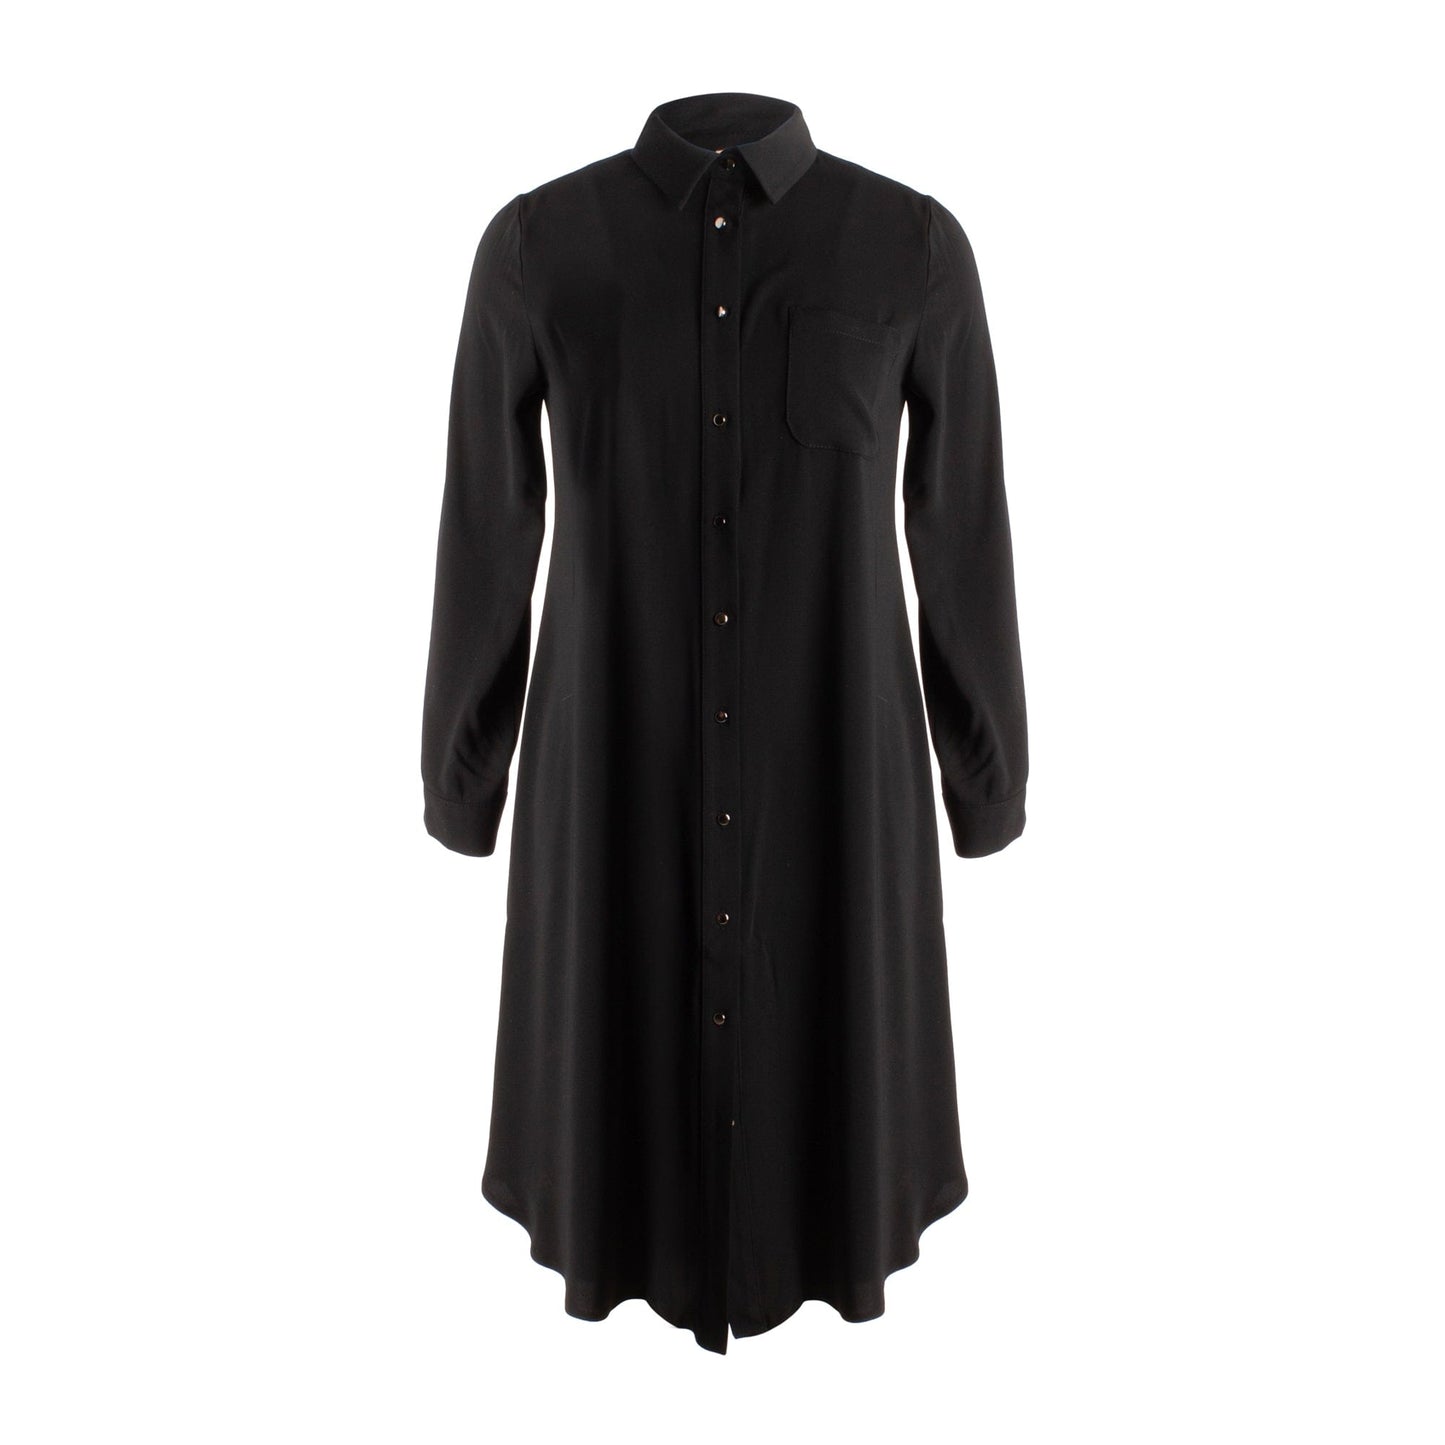 jolienisa Black Button Down Shirt Dress Tunic